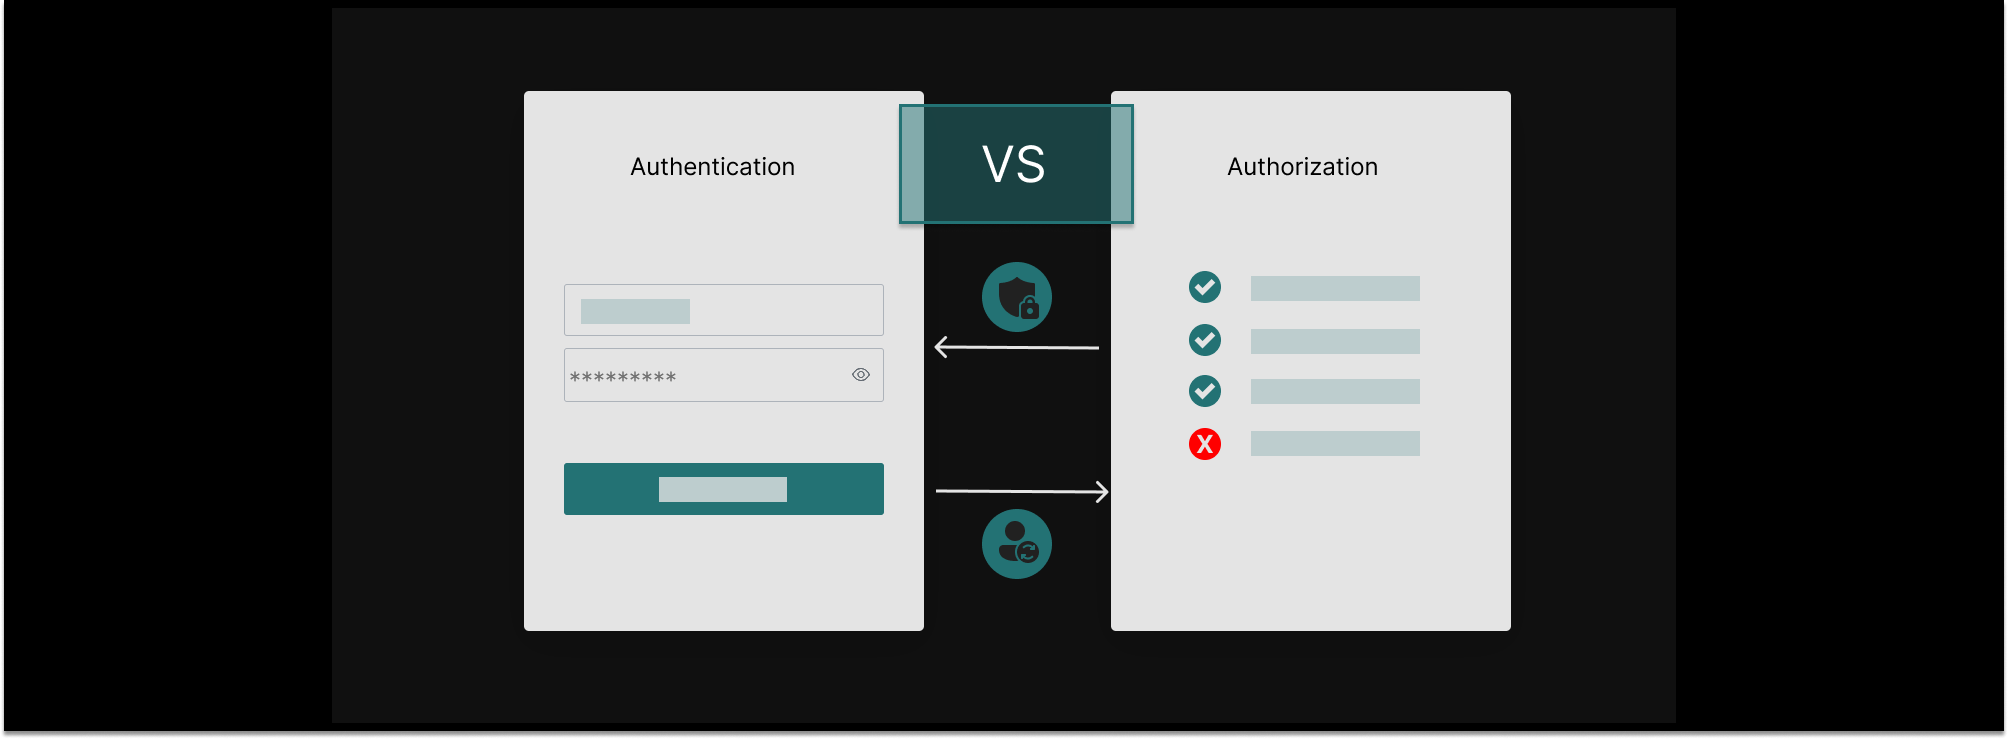 Application authentication vs authorization explained